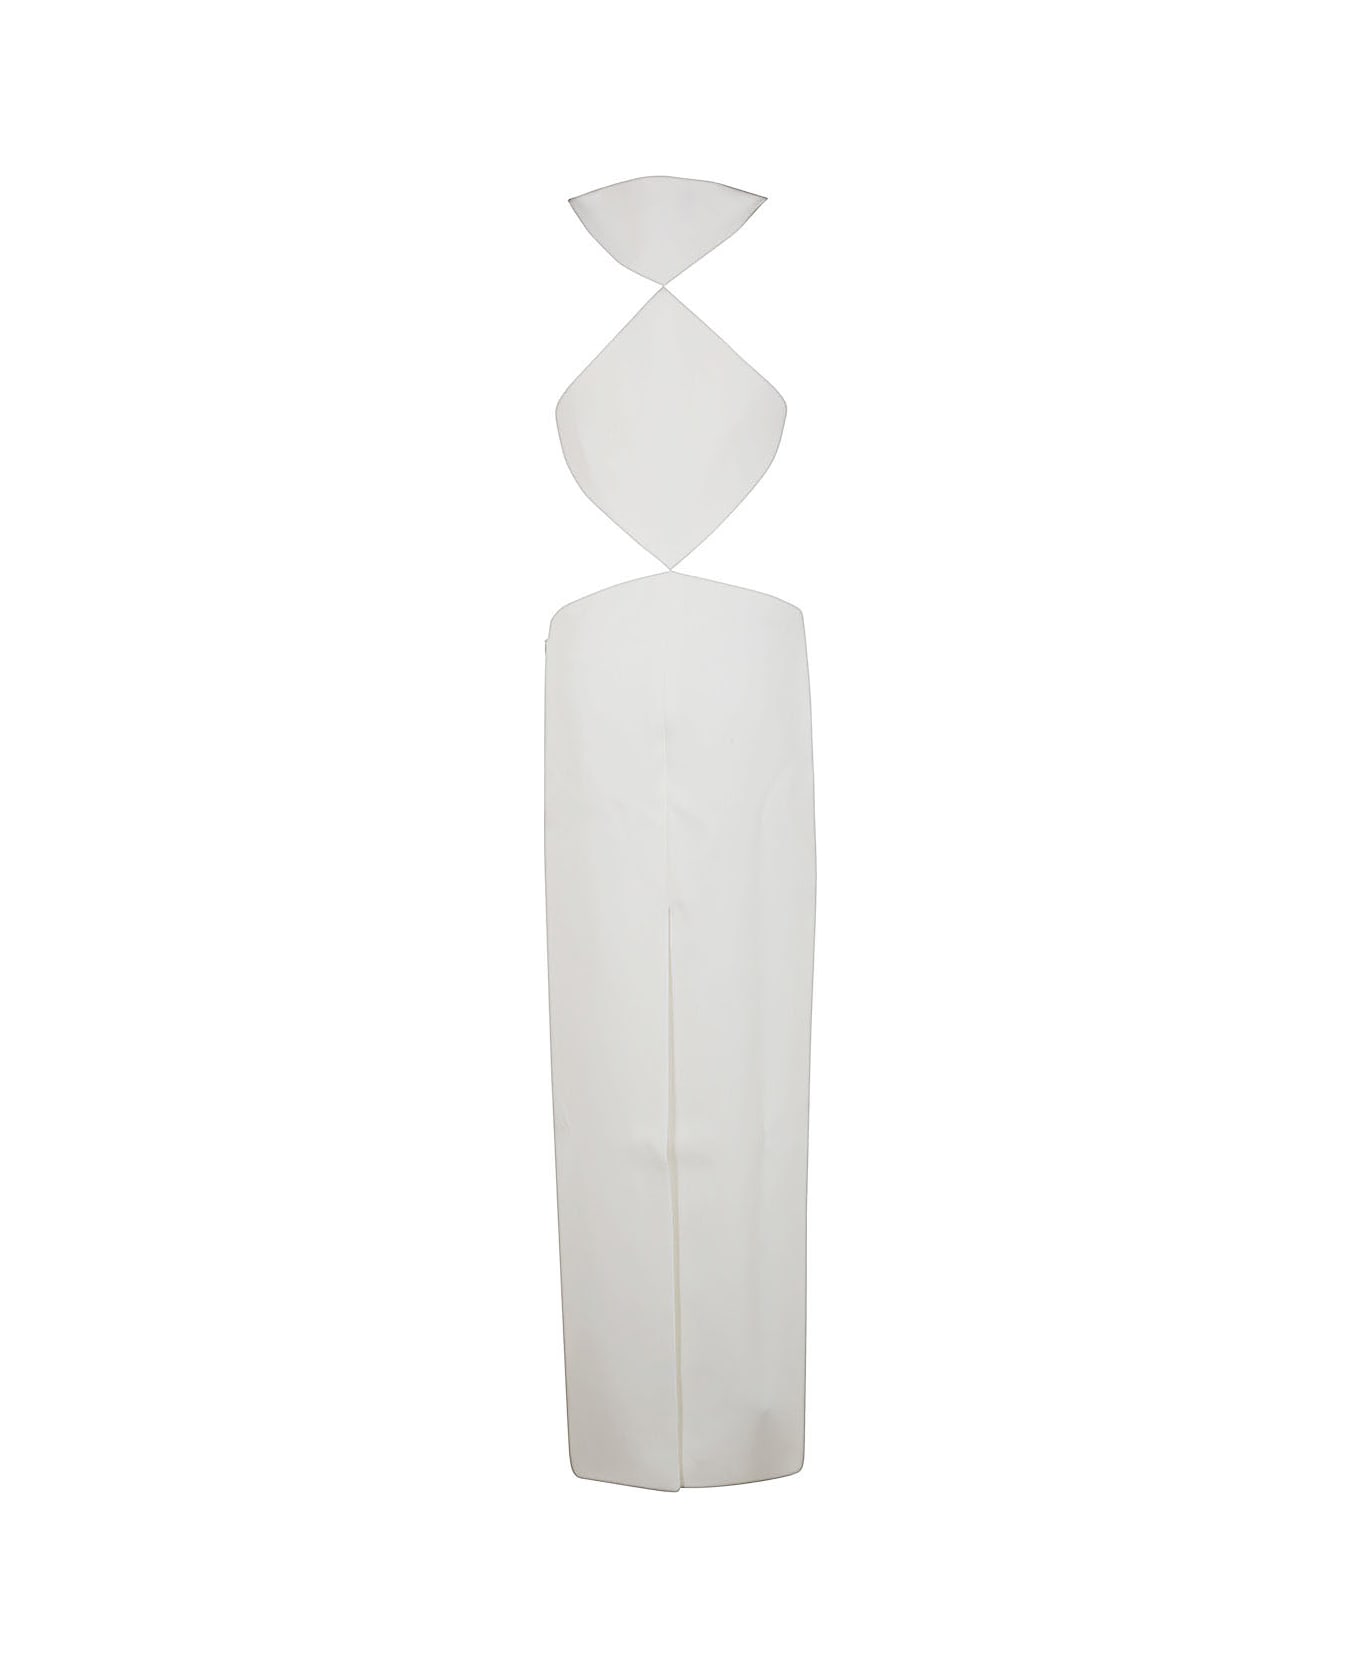 Versace Techno Bonded Granite` Gown - Optical White